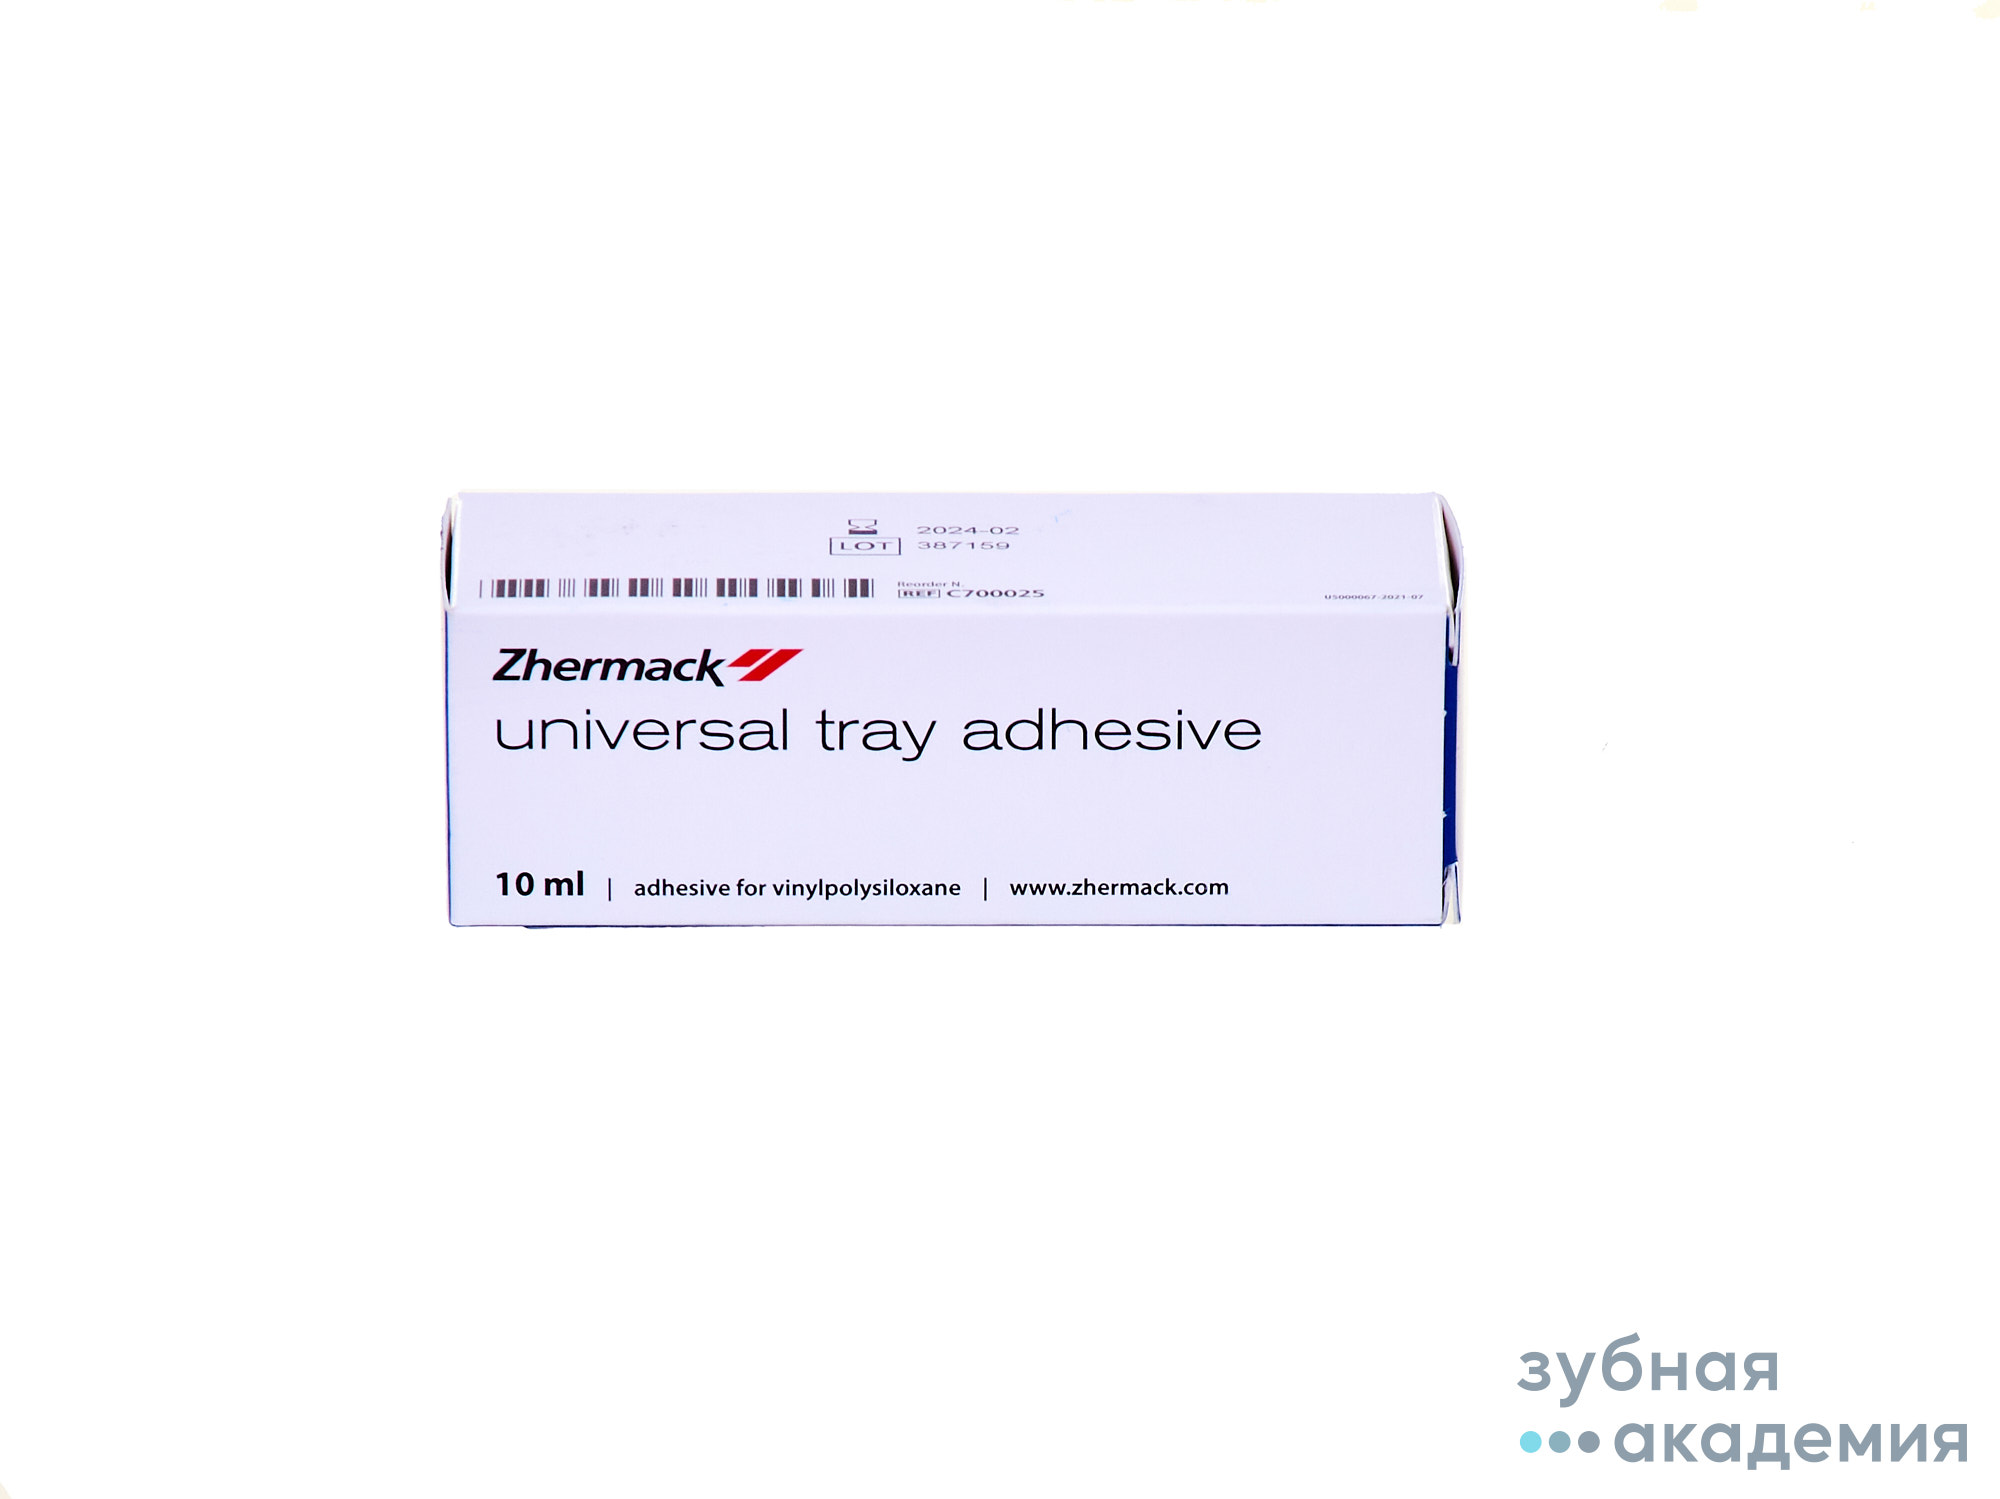 Universal Tray Adhesive - адгезив,склеивающее средство для А- и С-силиконов,(10мл.),Zhermaсk/Италия